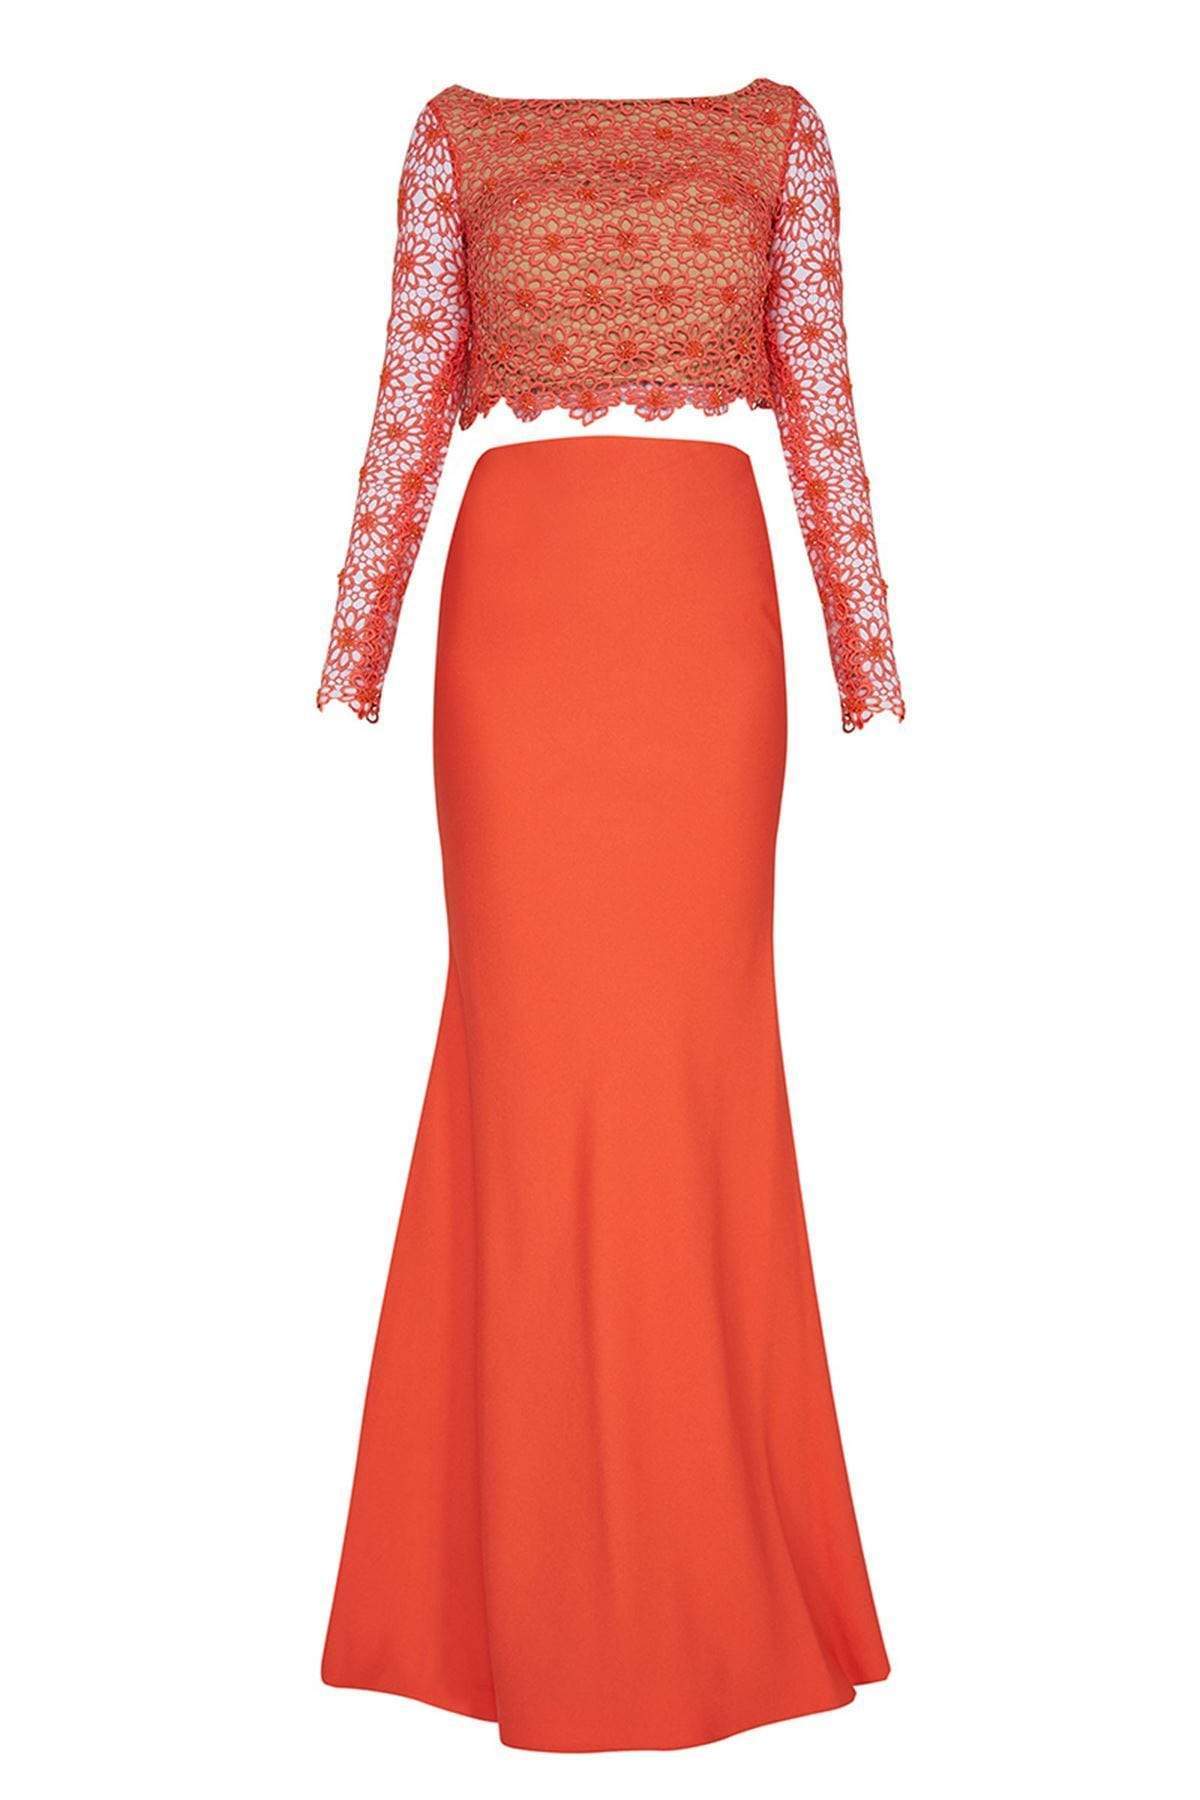 Tarik Ediz - Floral Long Sleeve Gown 92535 Special Occasion Dress 0 / Orange